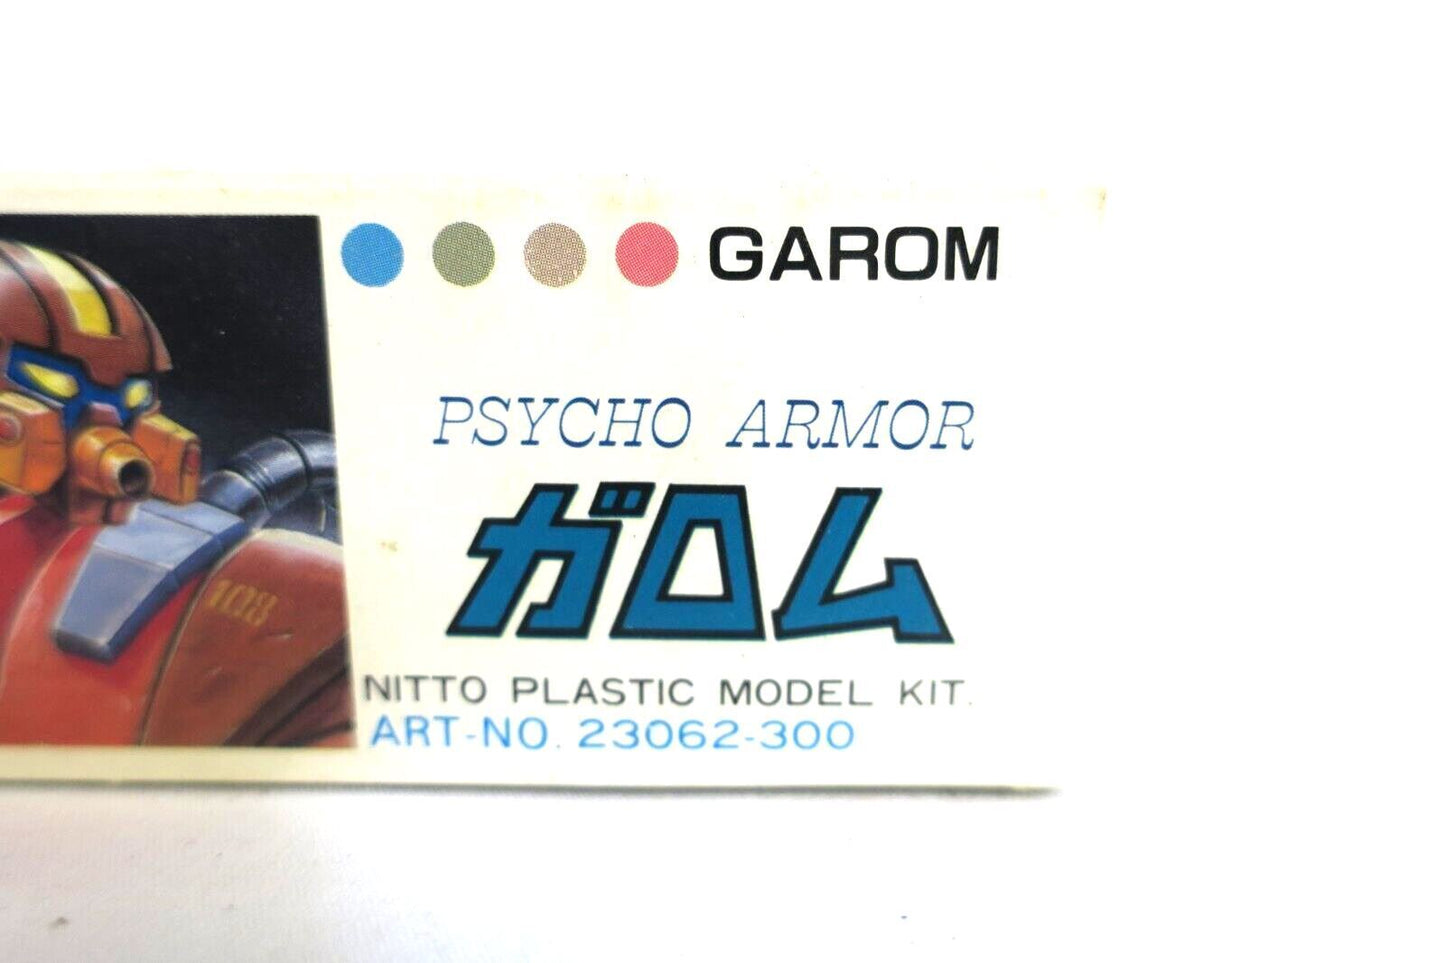 Nitto 1/100 Psycho Armor Govarian Psycho Armor Garom Model Kit (A8)